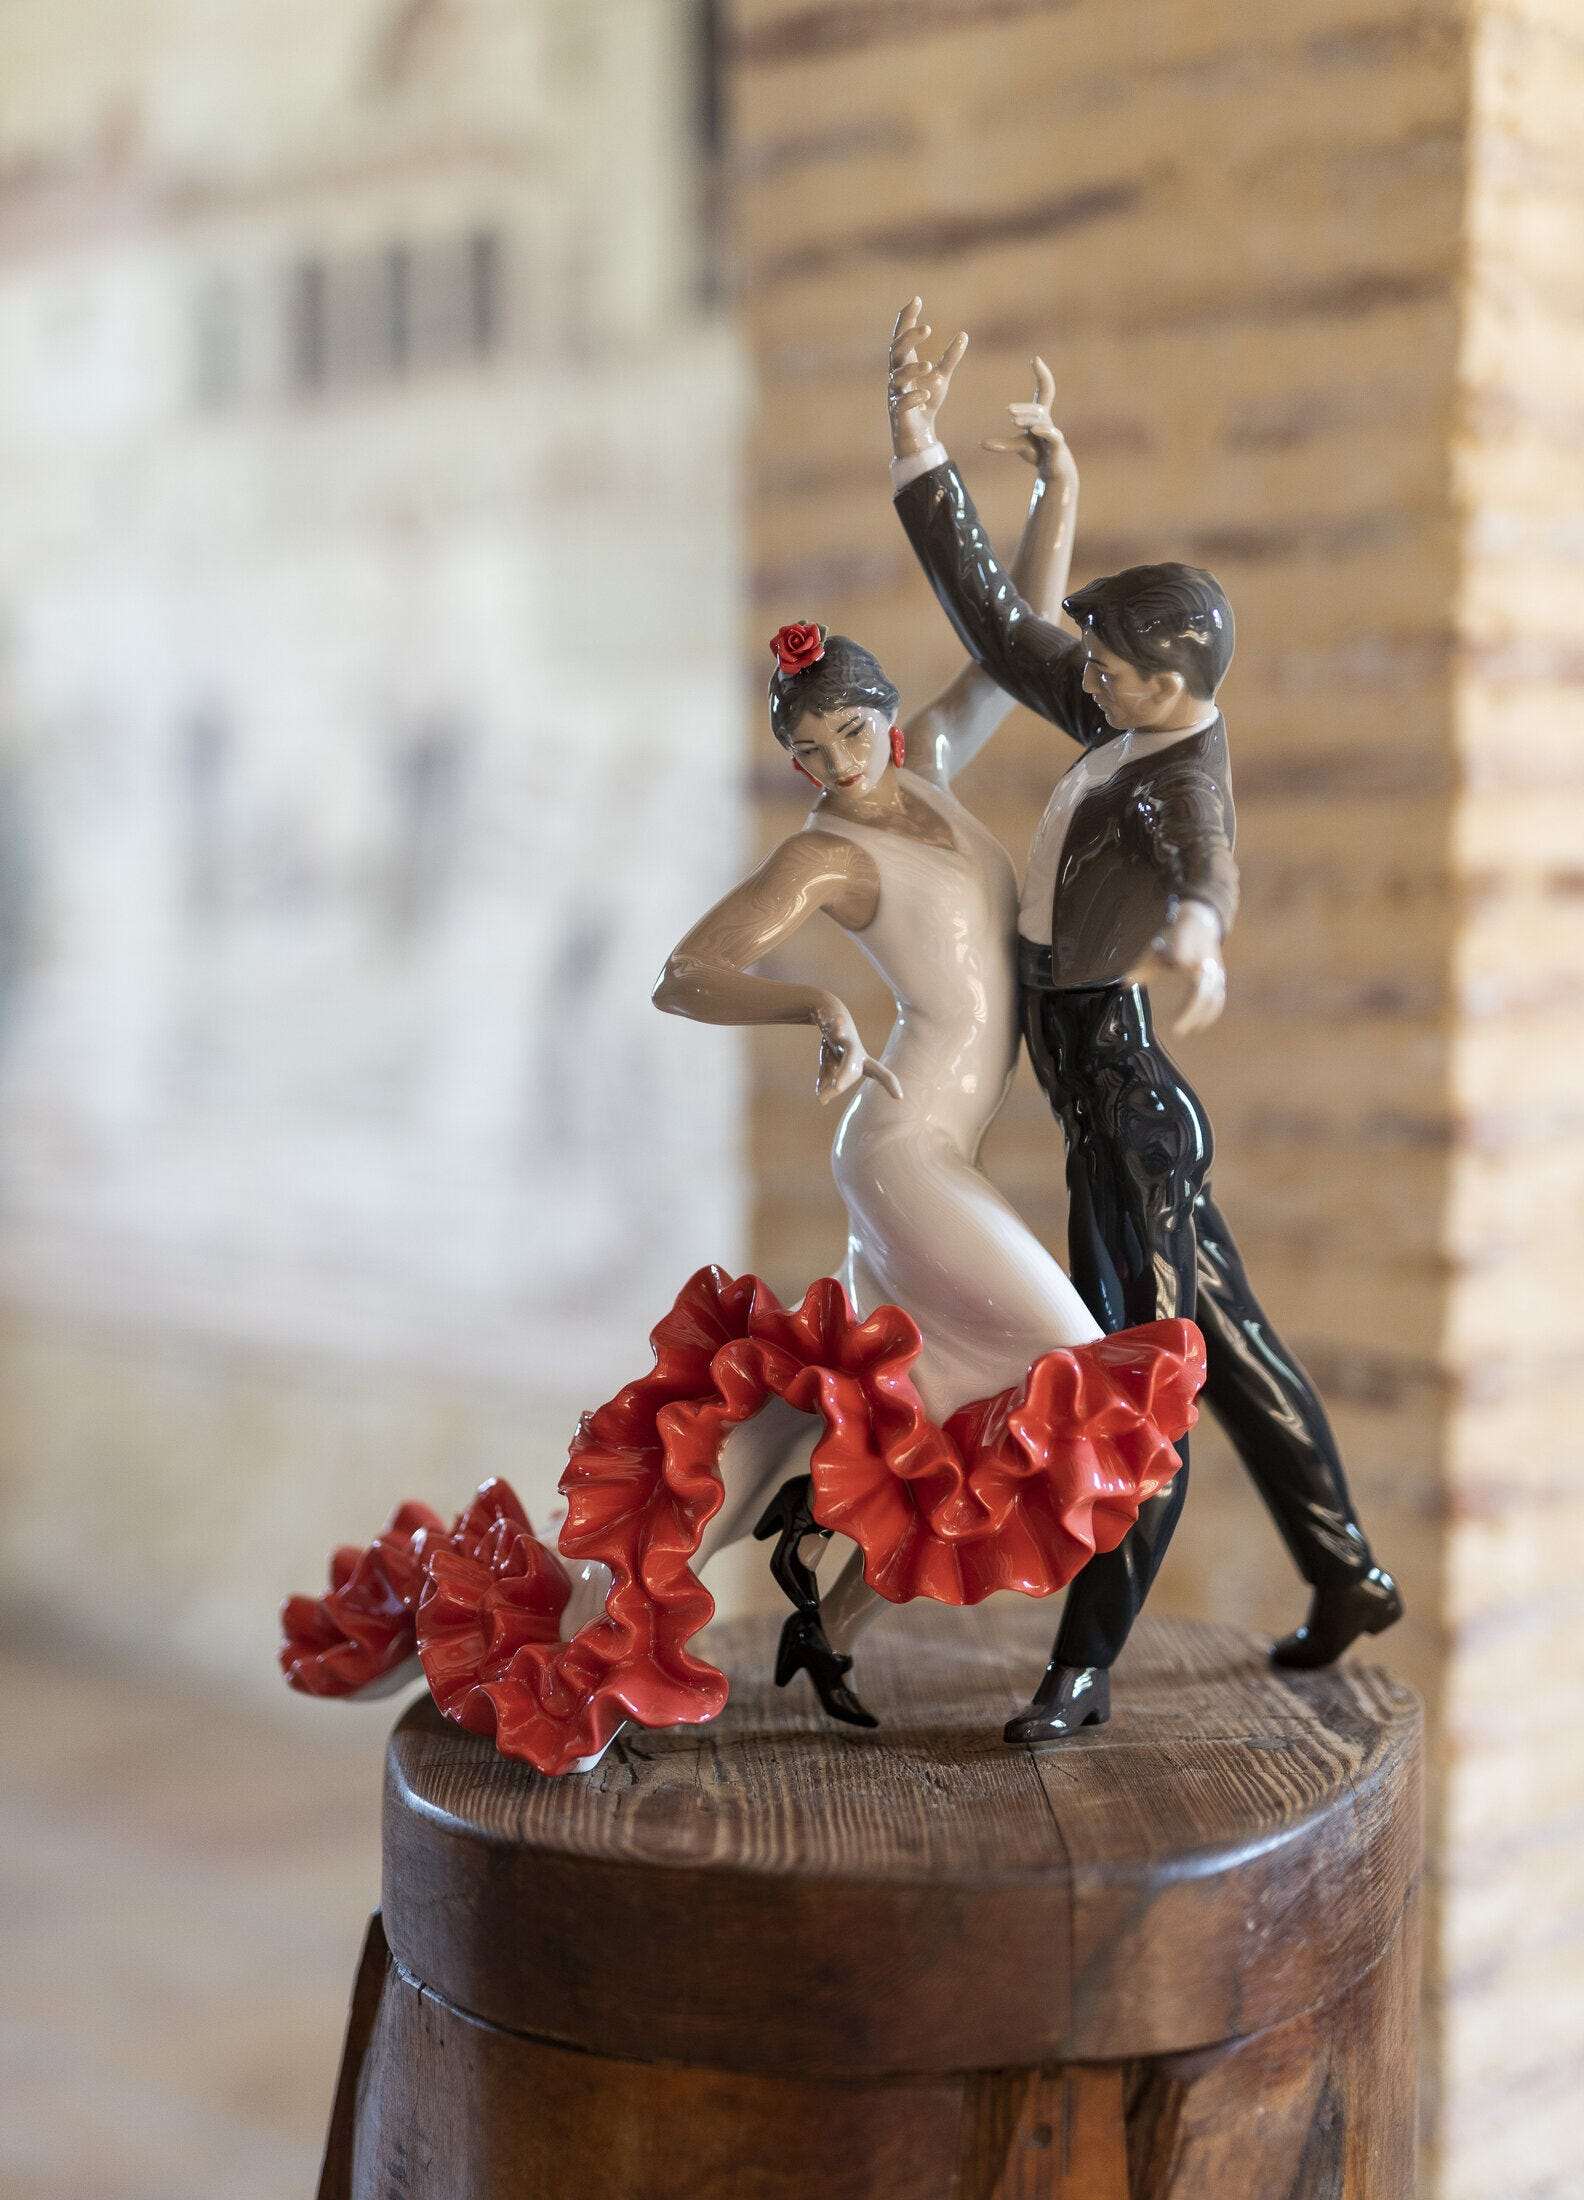 Flamenco Dancers Couple Figurine